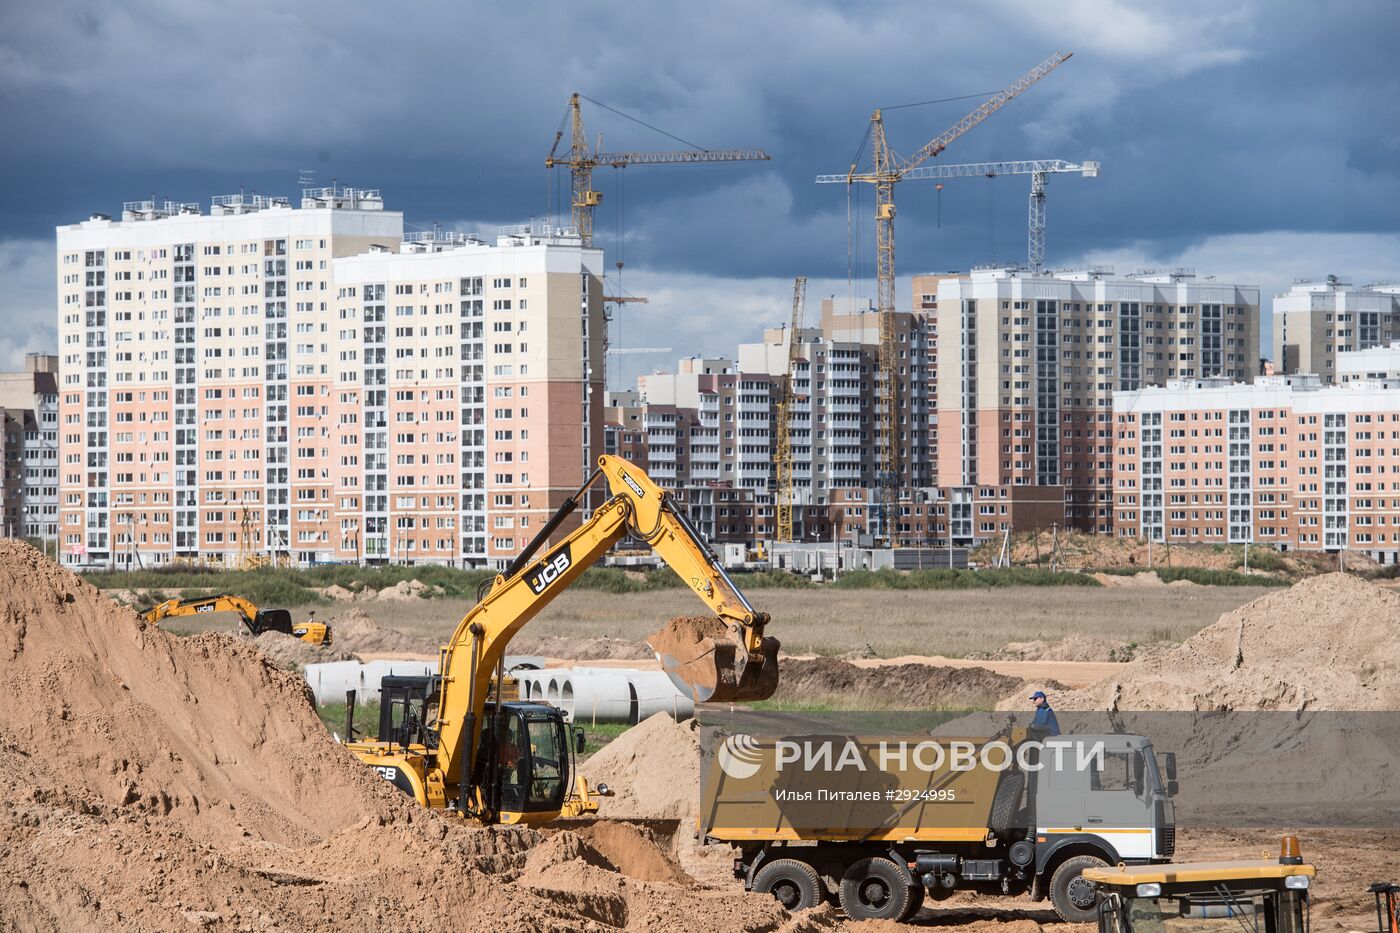 Строительство пятого пускового комплекса ЦКАД